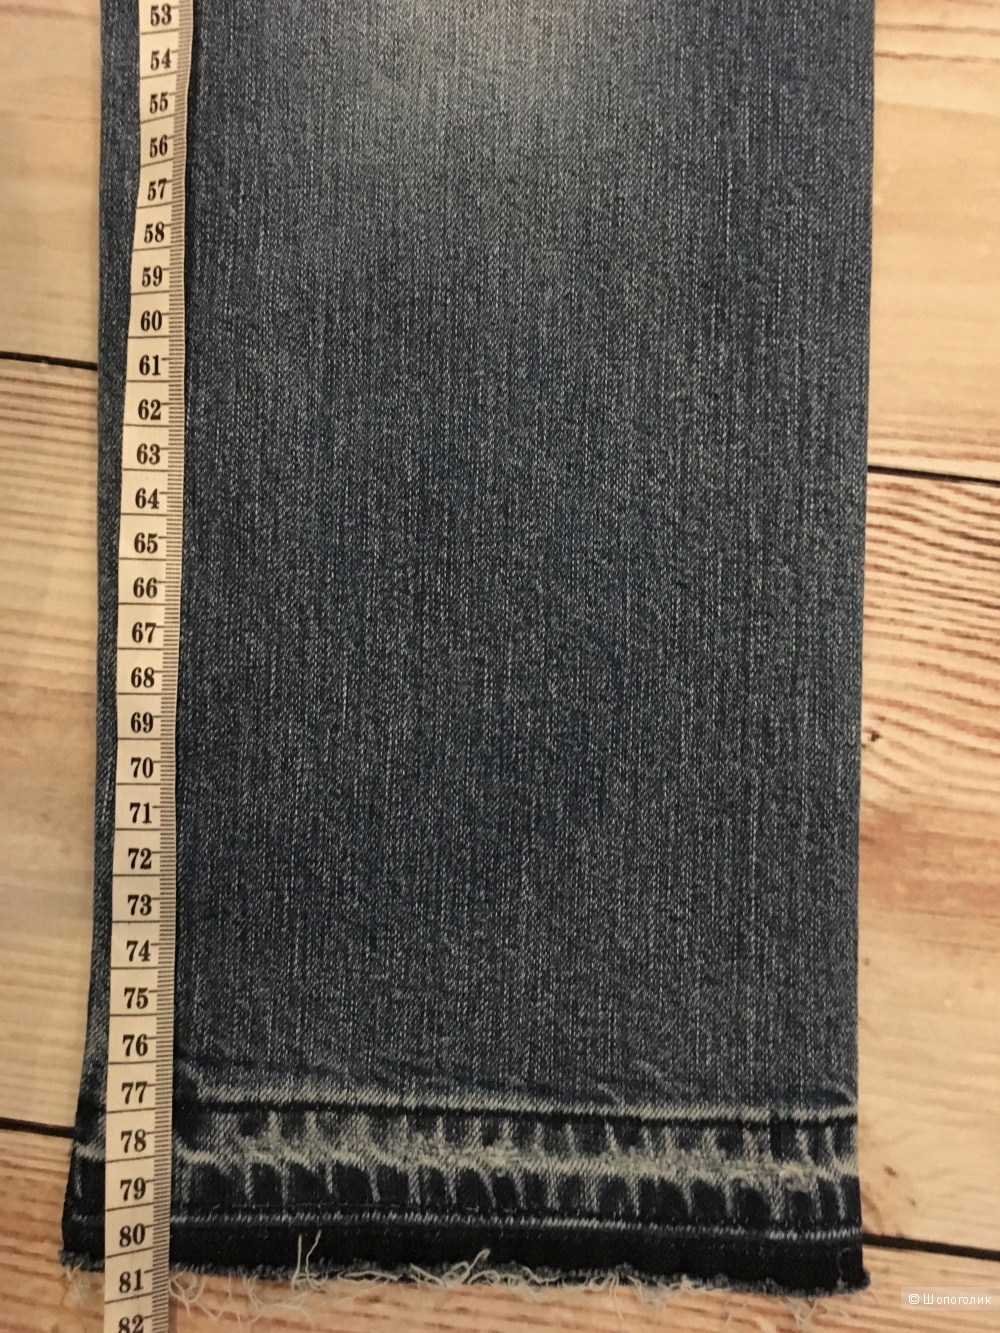 Мужские джинсы COVERT, размер 30, на рос. 44